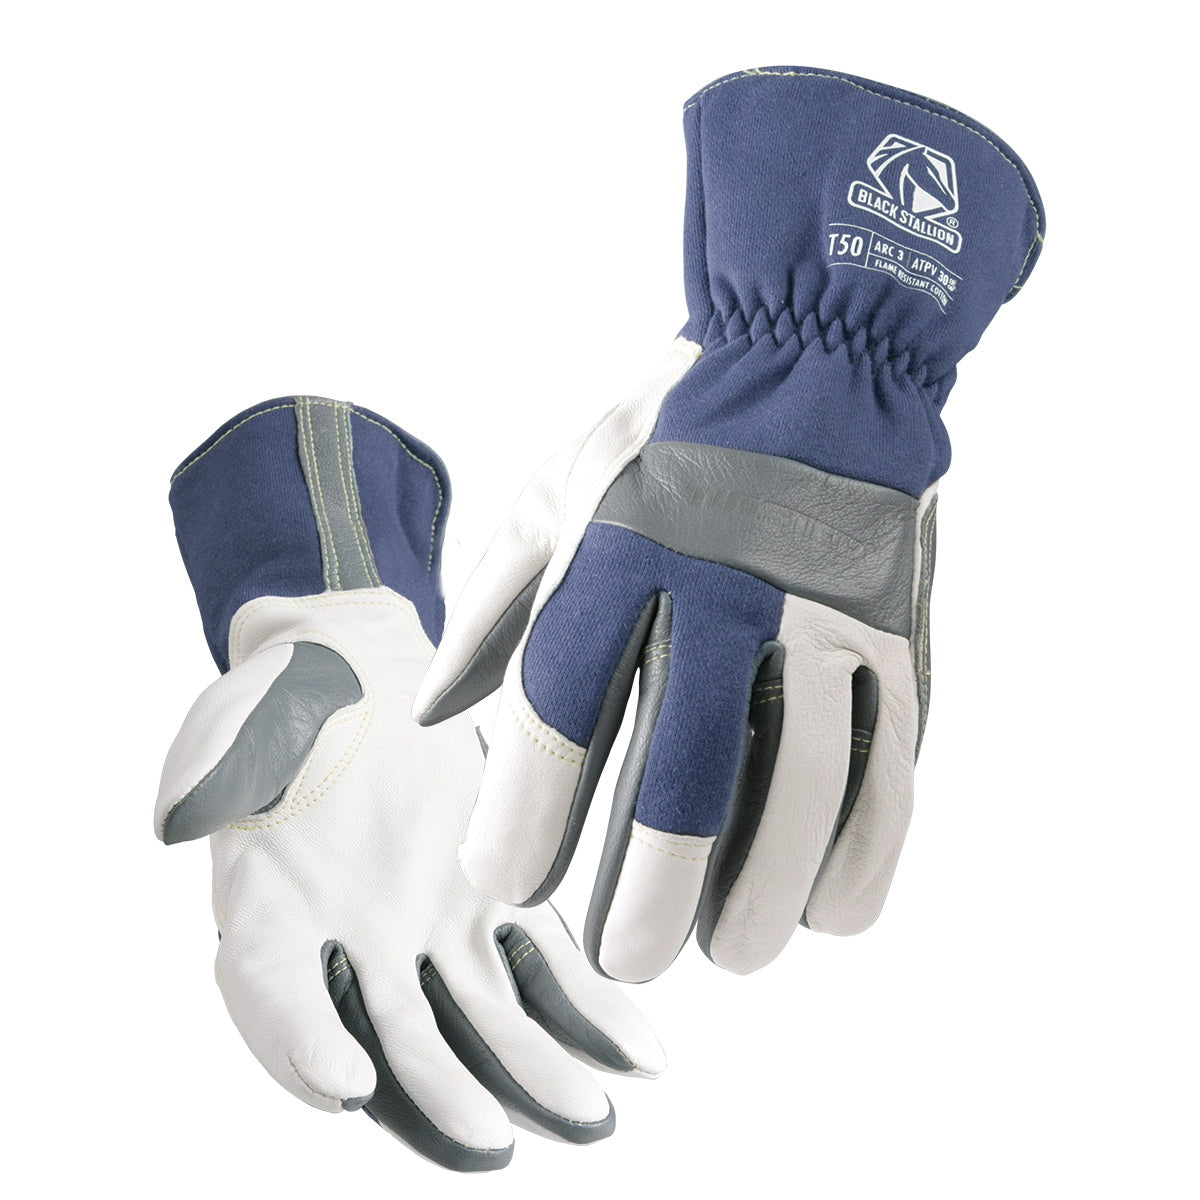 Revco Black Stallion Premium Kidskin and FR Cotton Tigster TIG Gloves (T50)